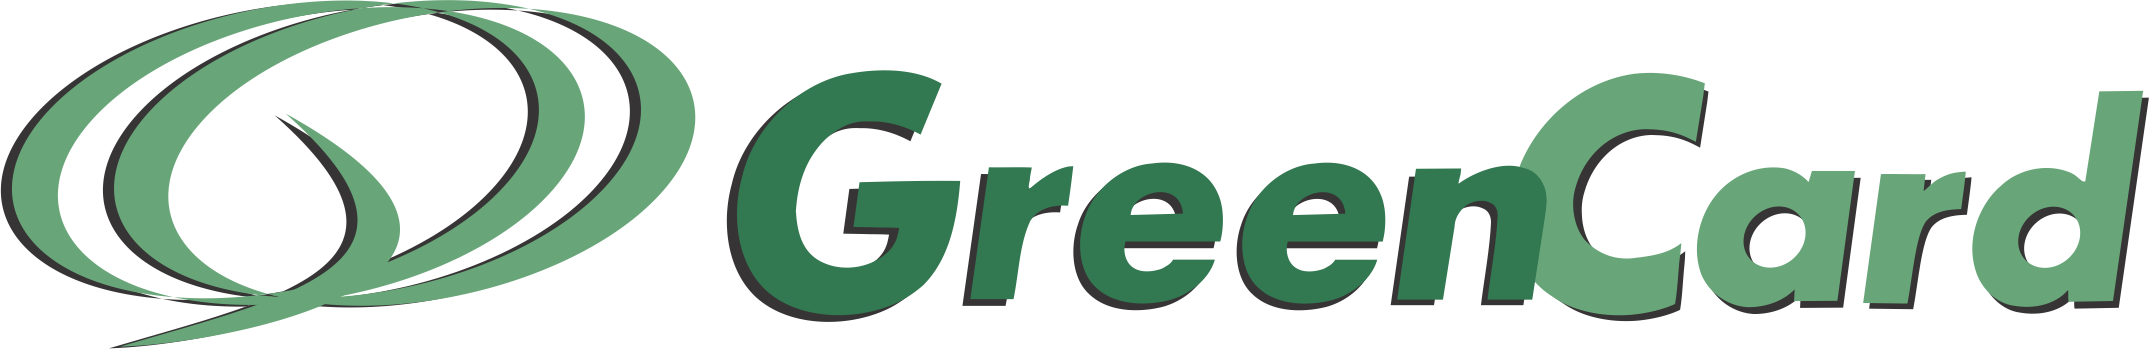 Carta verde